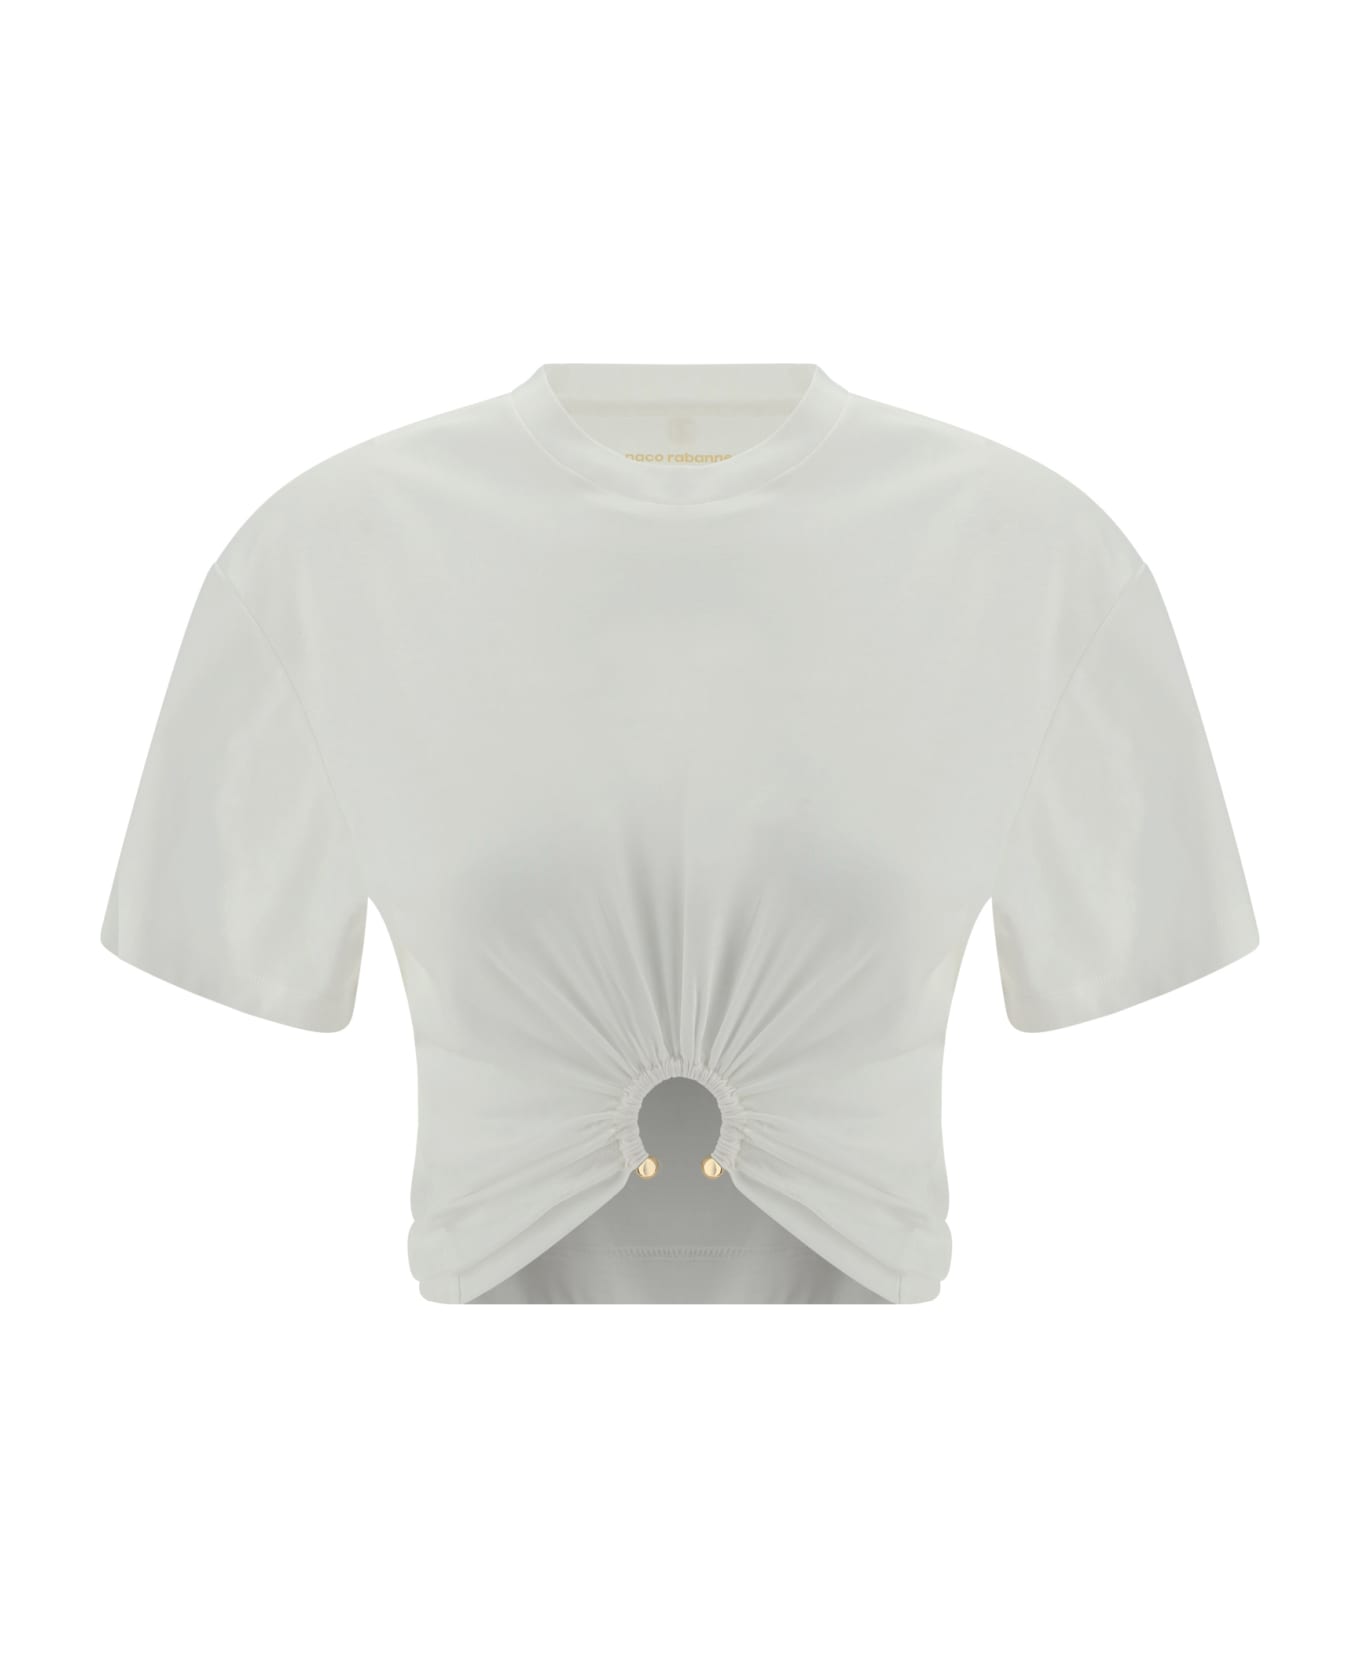 Paco Rabanne T-shirt - Bianco